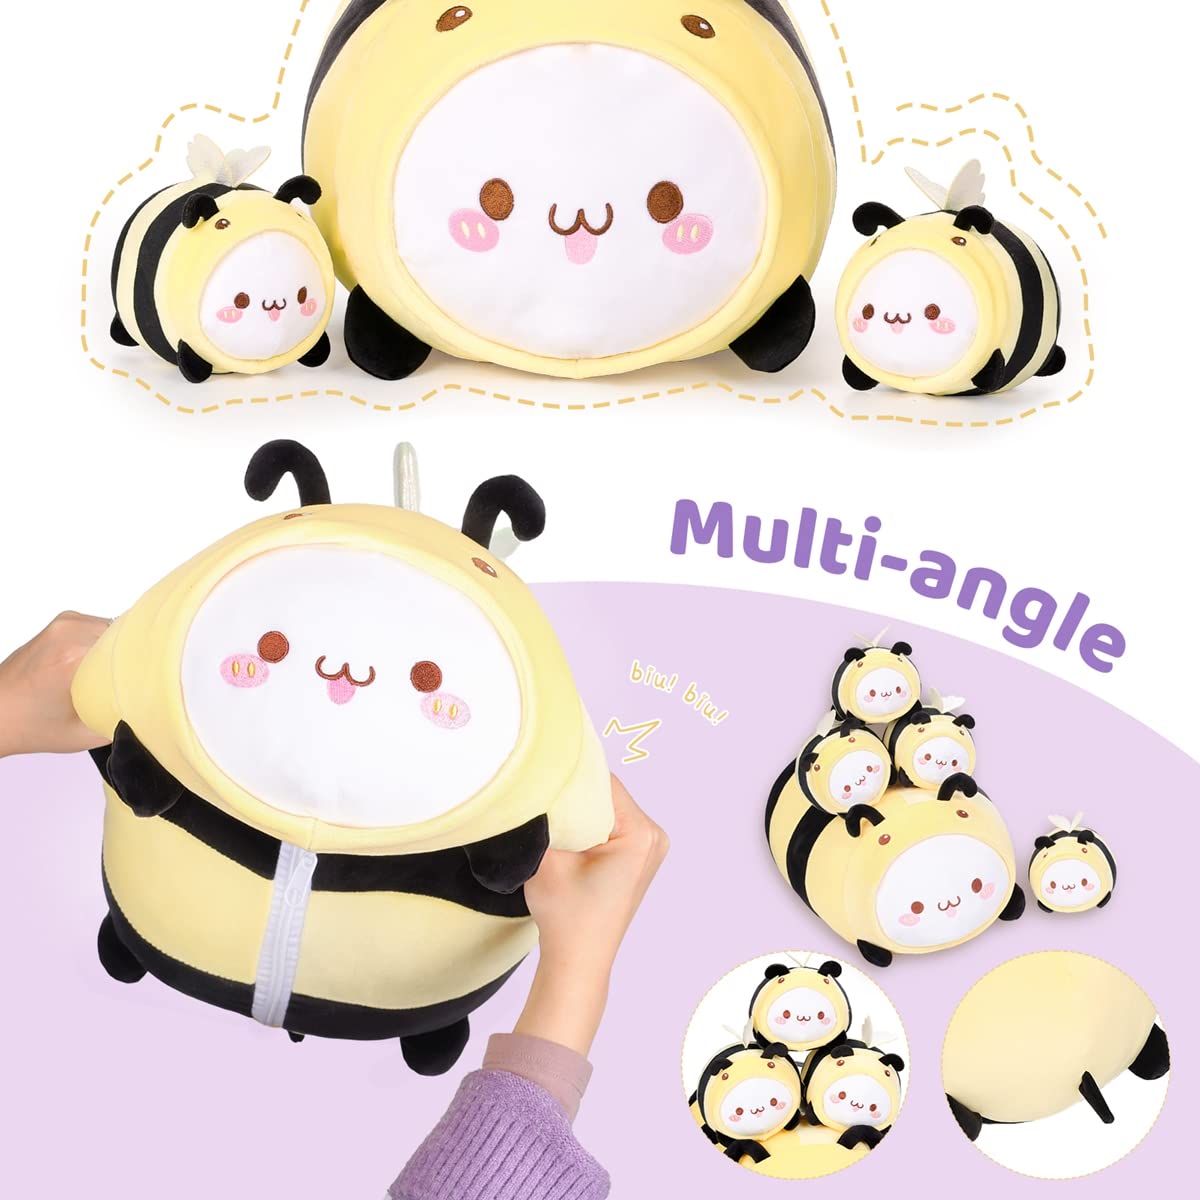 Cute Bee Mother Stuffed Animal and 4 Baby Bees Plush, Super Soft Cartoon Hug Toy Gift Bedding, Kids Sleeping Kawaii Pillow